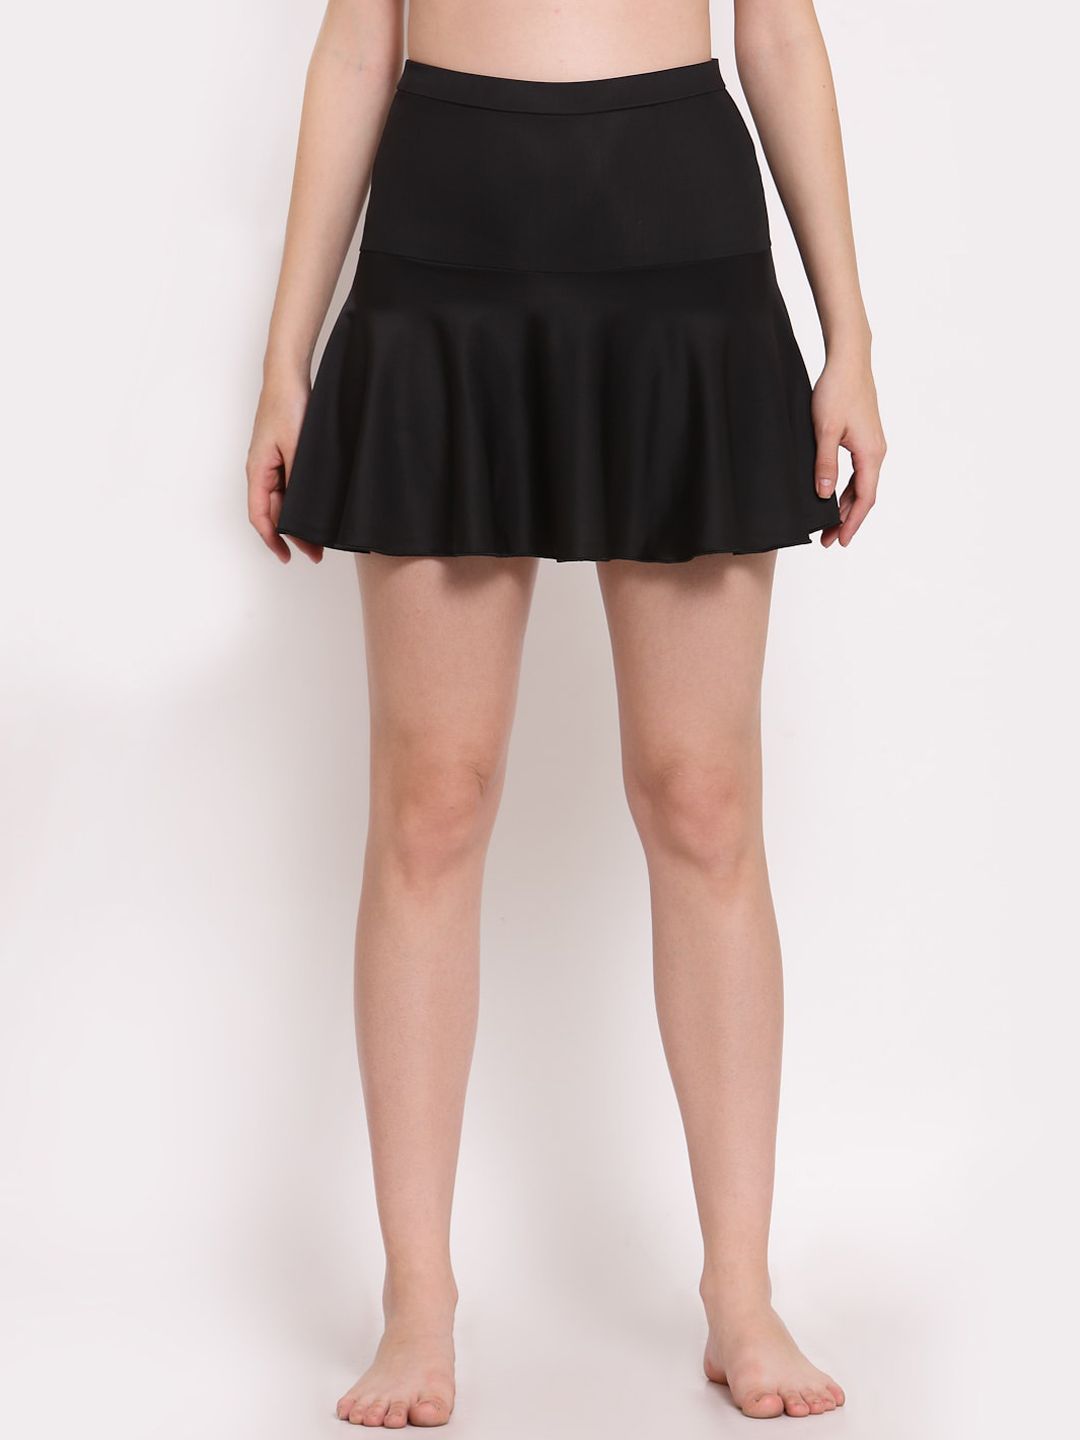 CUKOO Women Black Solid Comfort-Fit Swim Bottom Skirt CK19-238 Price in India